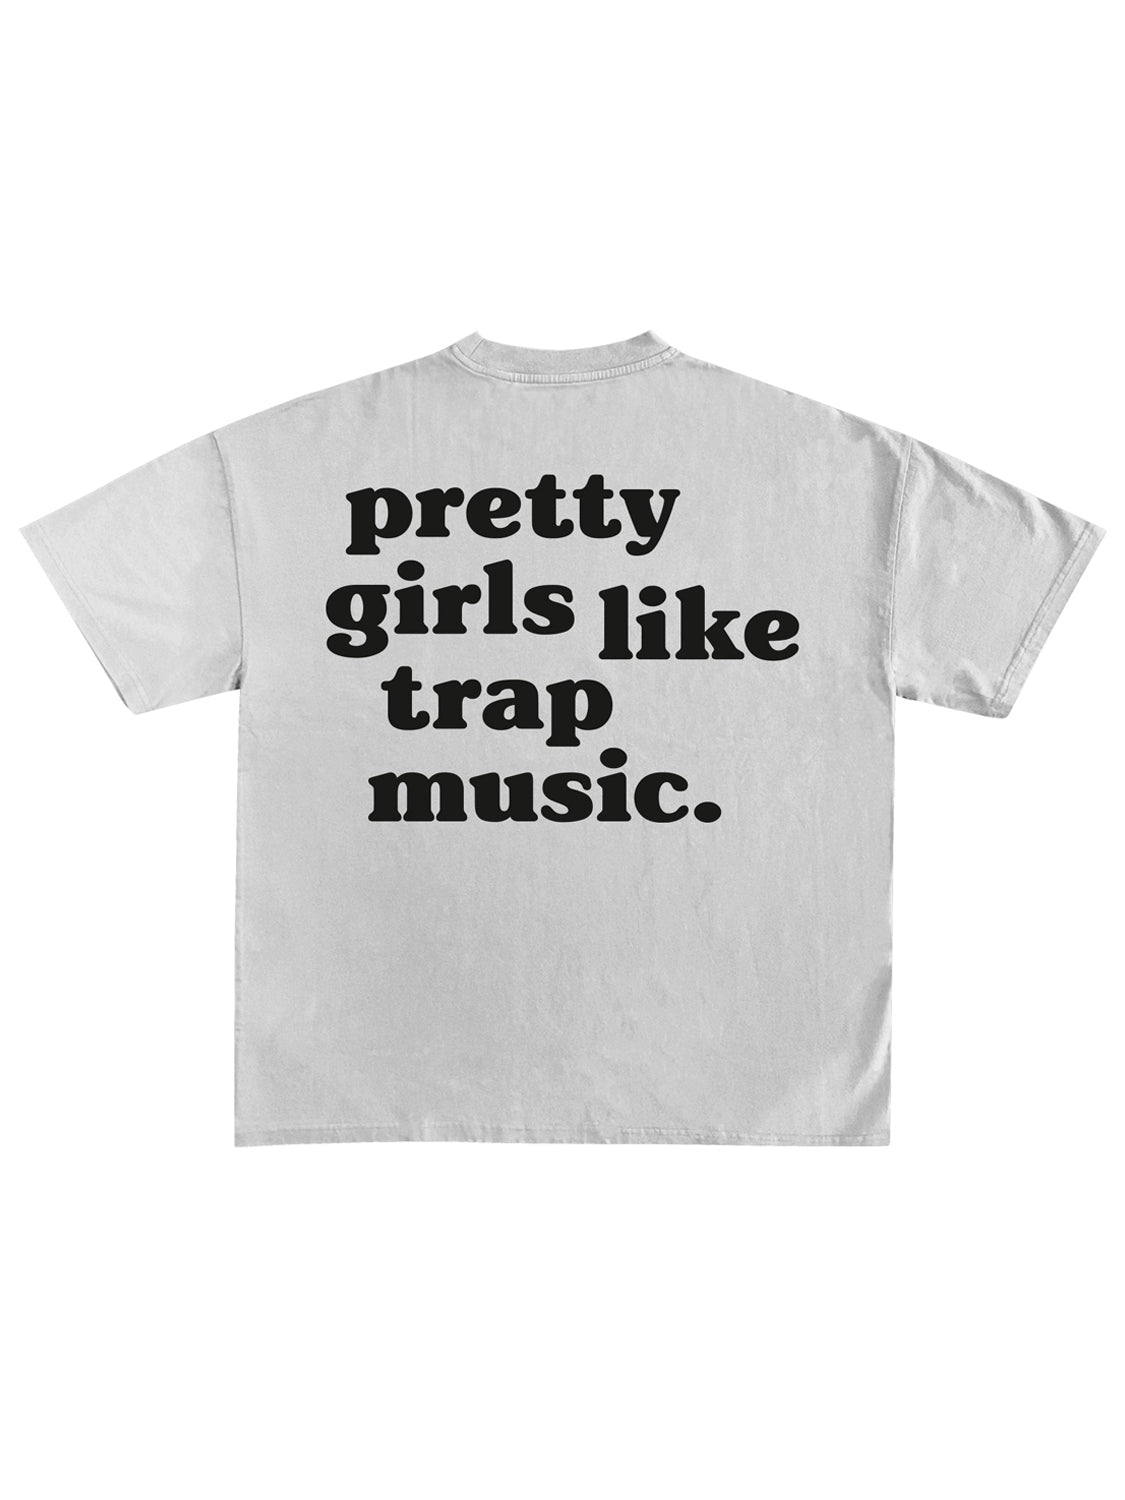 T-SHIRT "PRETTY GIRLS LIKE TRAP MUSIC"  - Col. Bianco